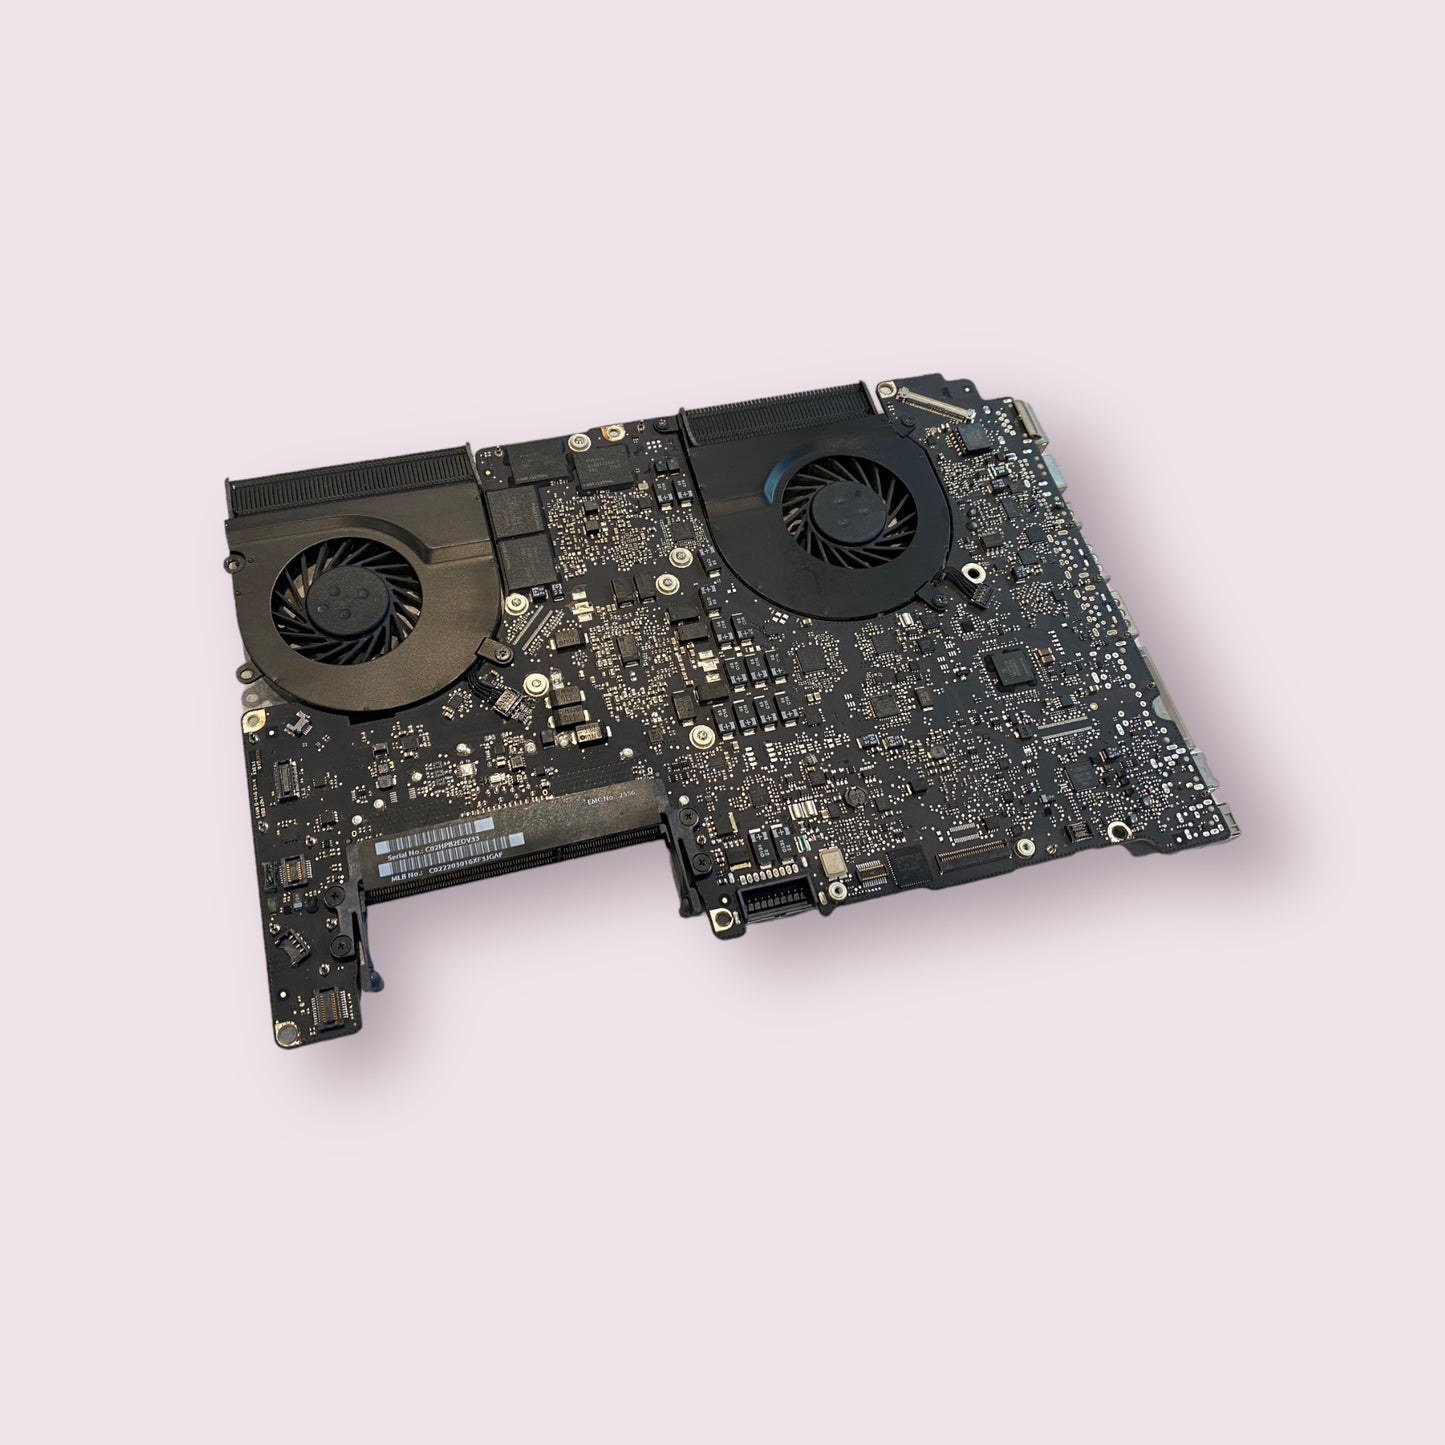 Macbook Pro 15" 2012 A1286 Motherboard 820-3330-A i7 Processor - Genuine Pull Part